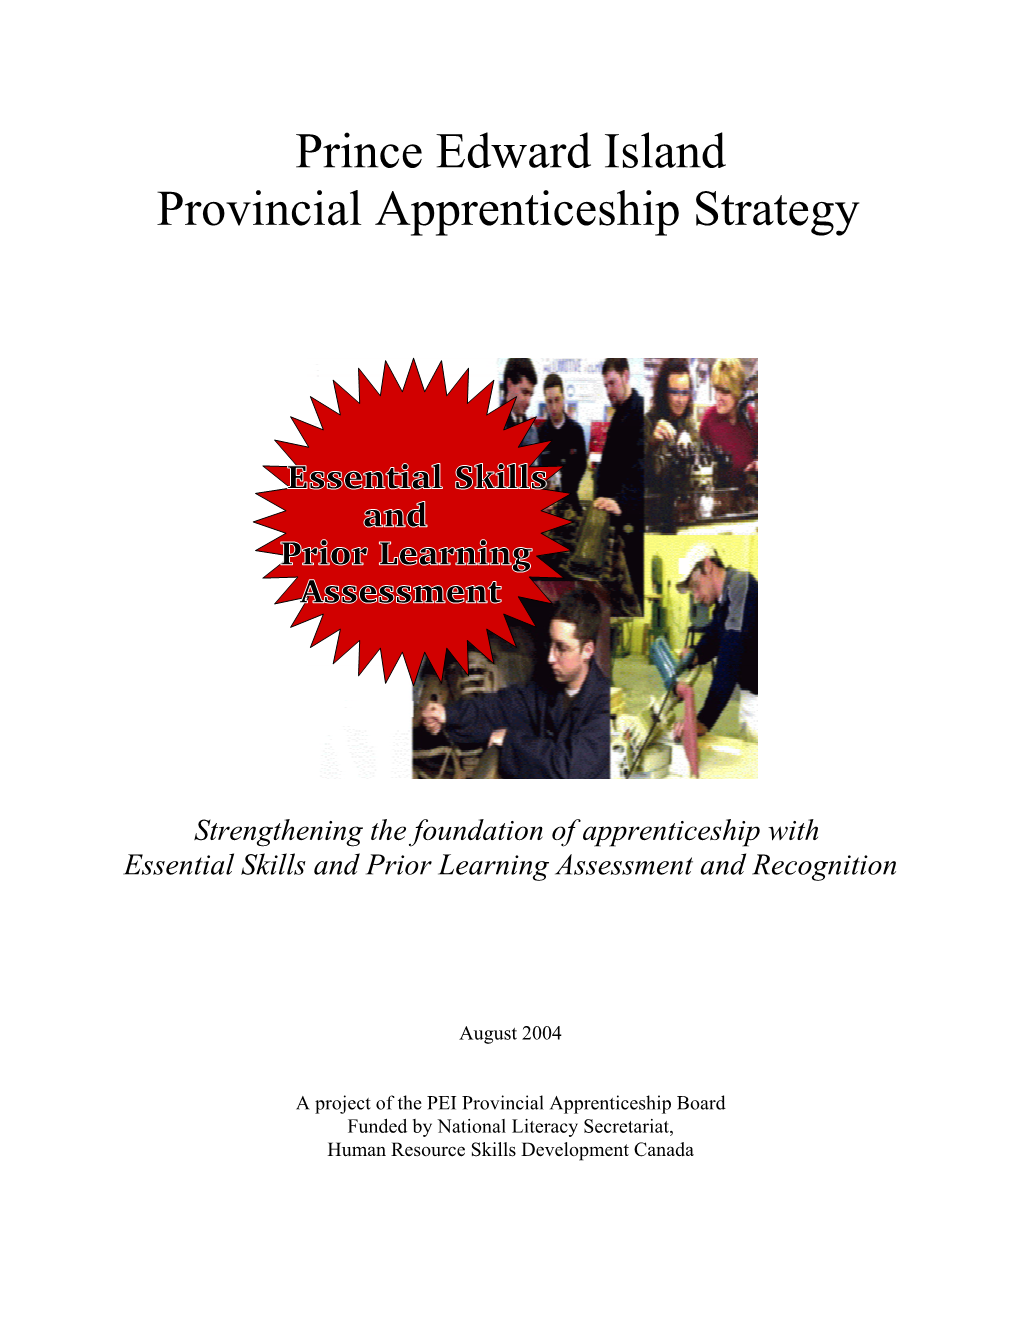 Prince Edward Island Provincial Apprenticeship Strategy